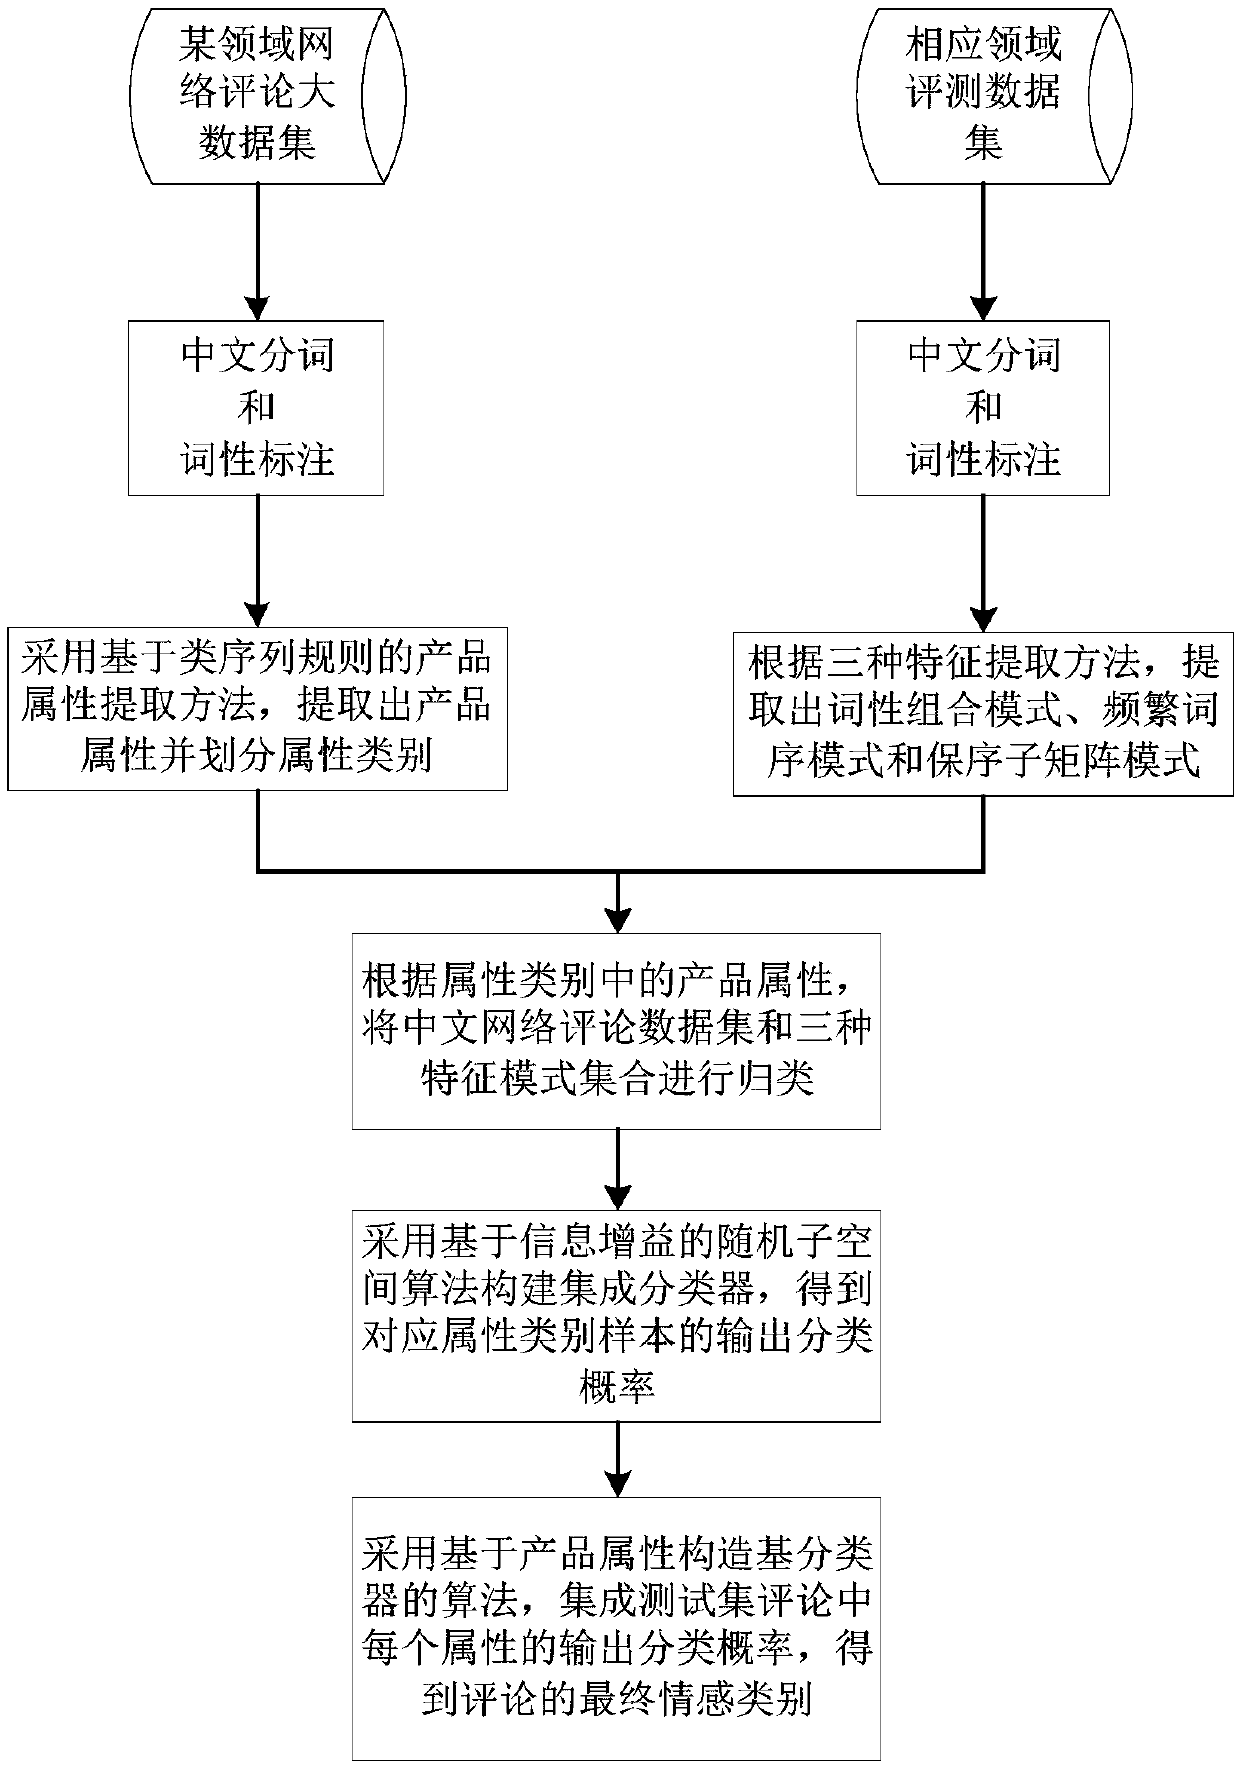 Sentiment Classification Method of Chinese Internet Reviews Based on Ensemble Learning Framework